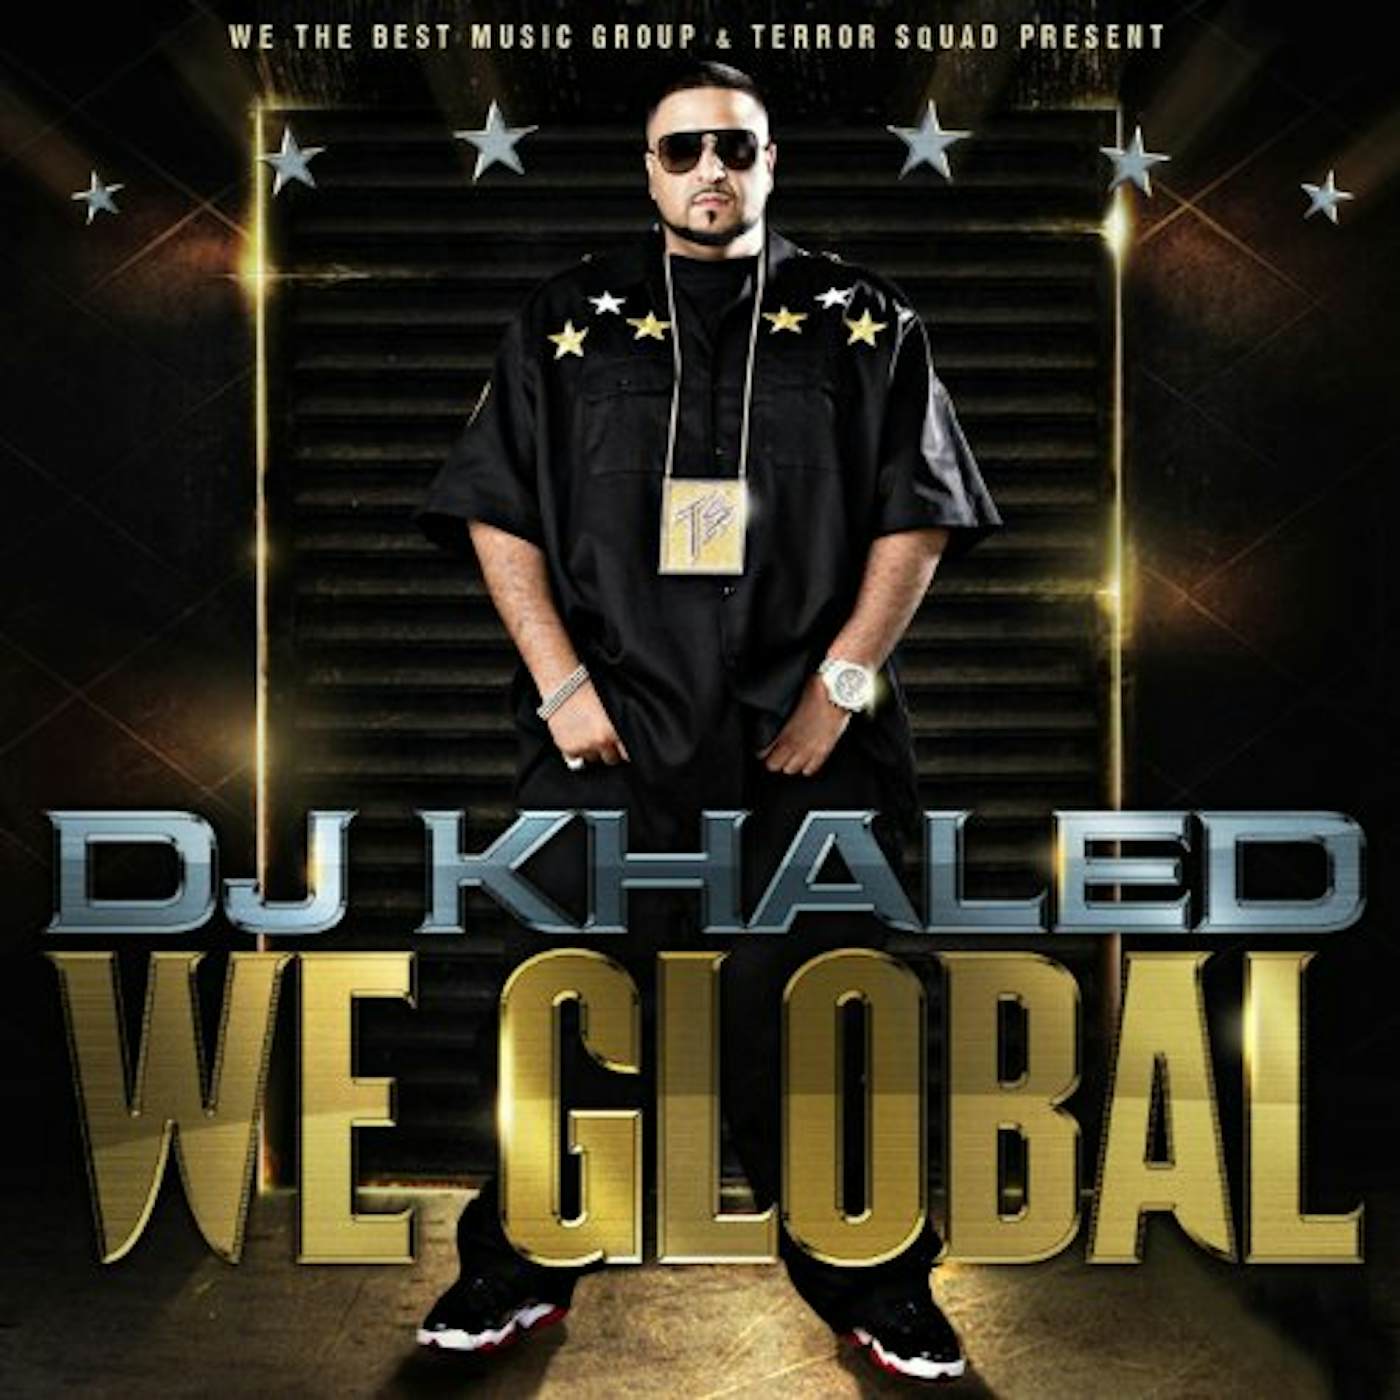 DJ Khaled WE GLOBAL CD